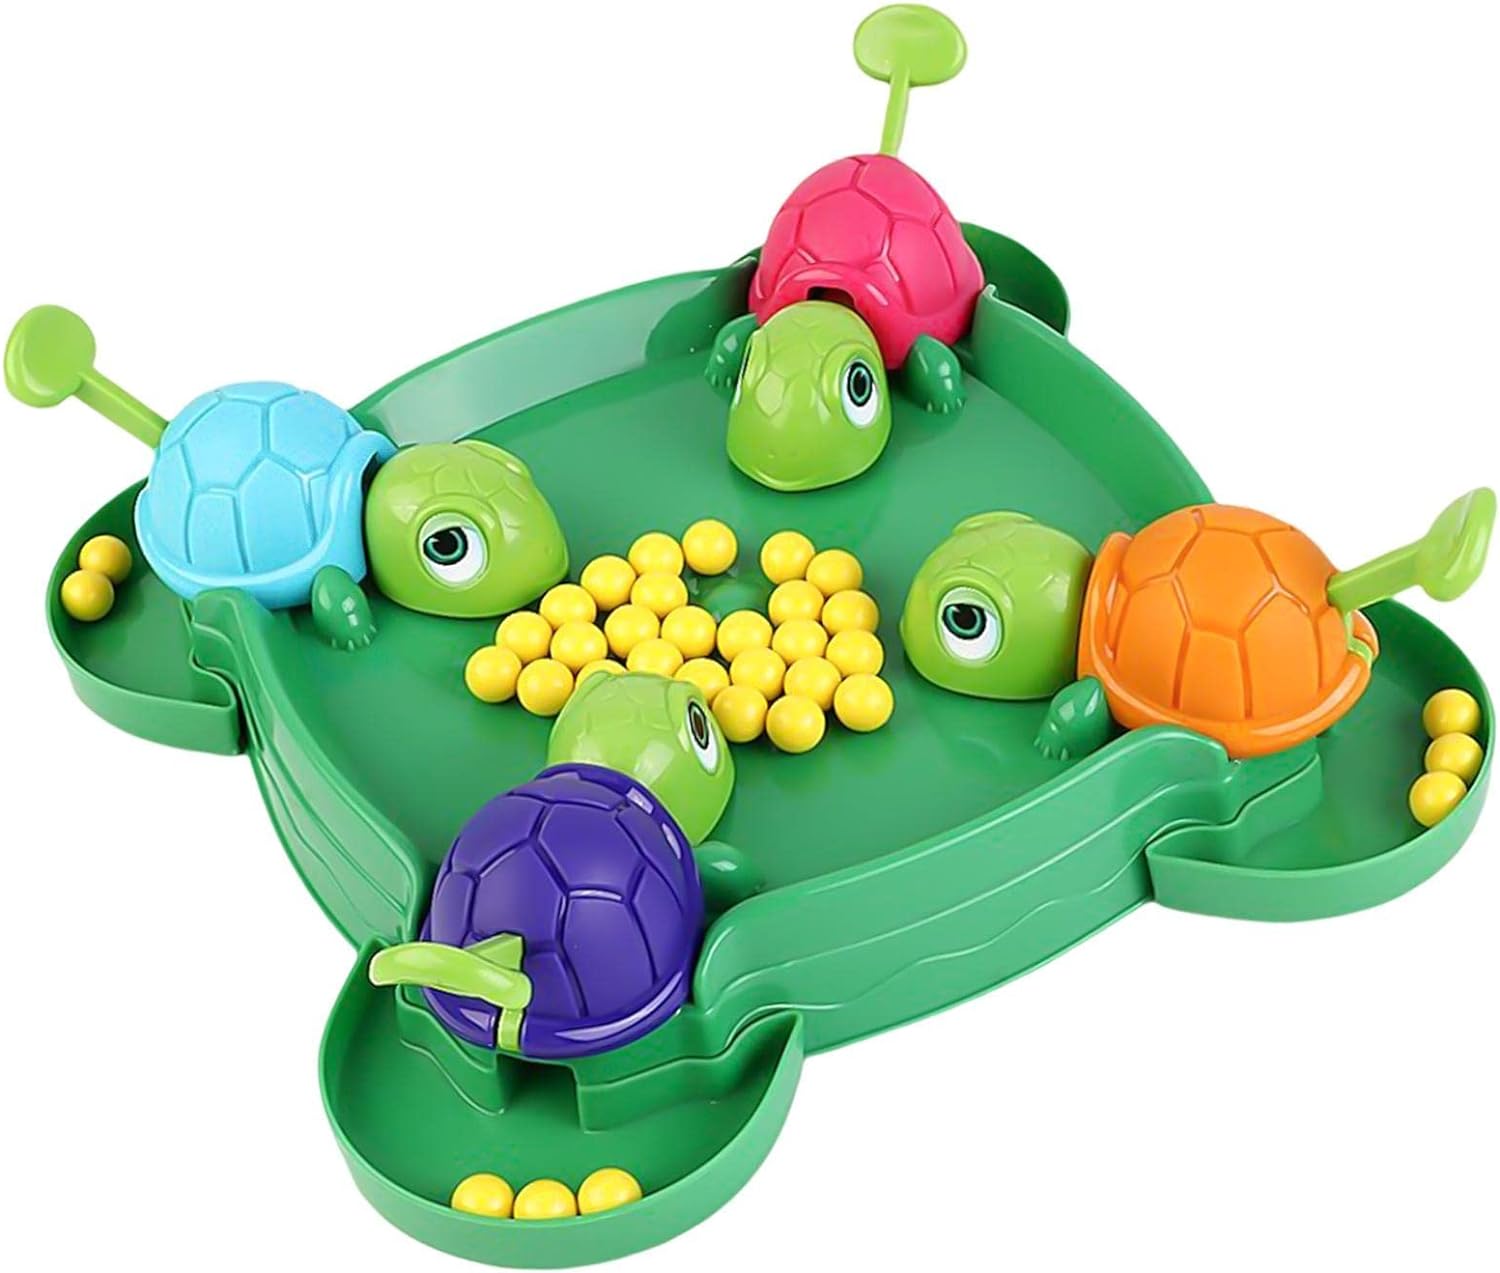 Fun Board Game for 4 Players Turtle Set